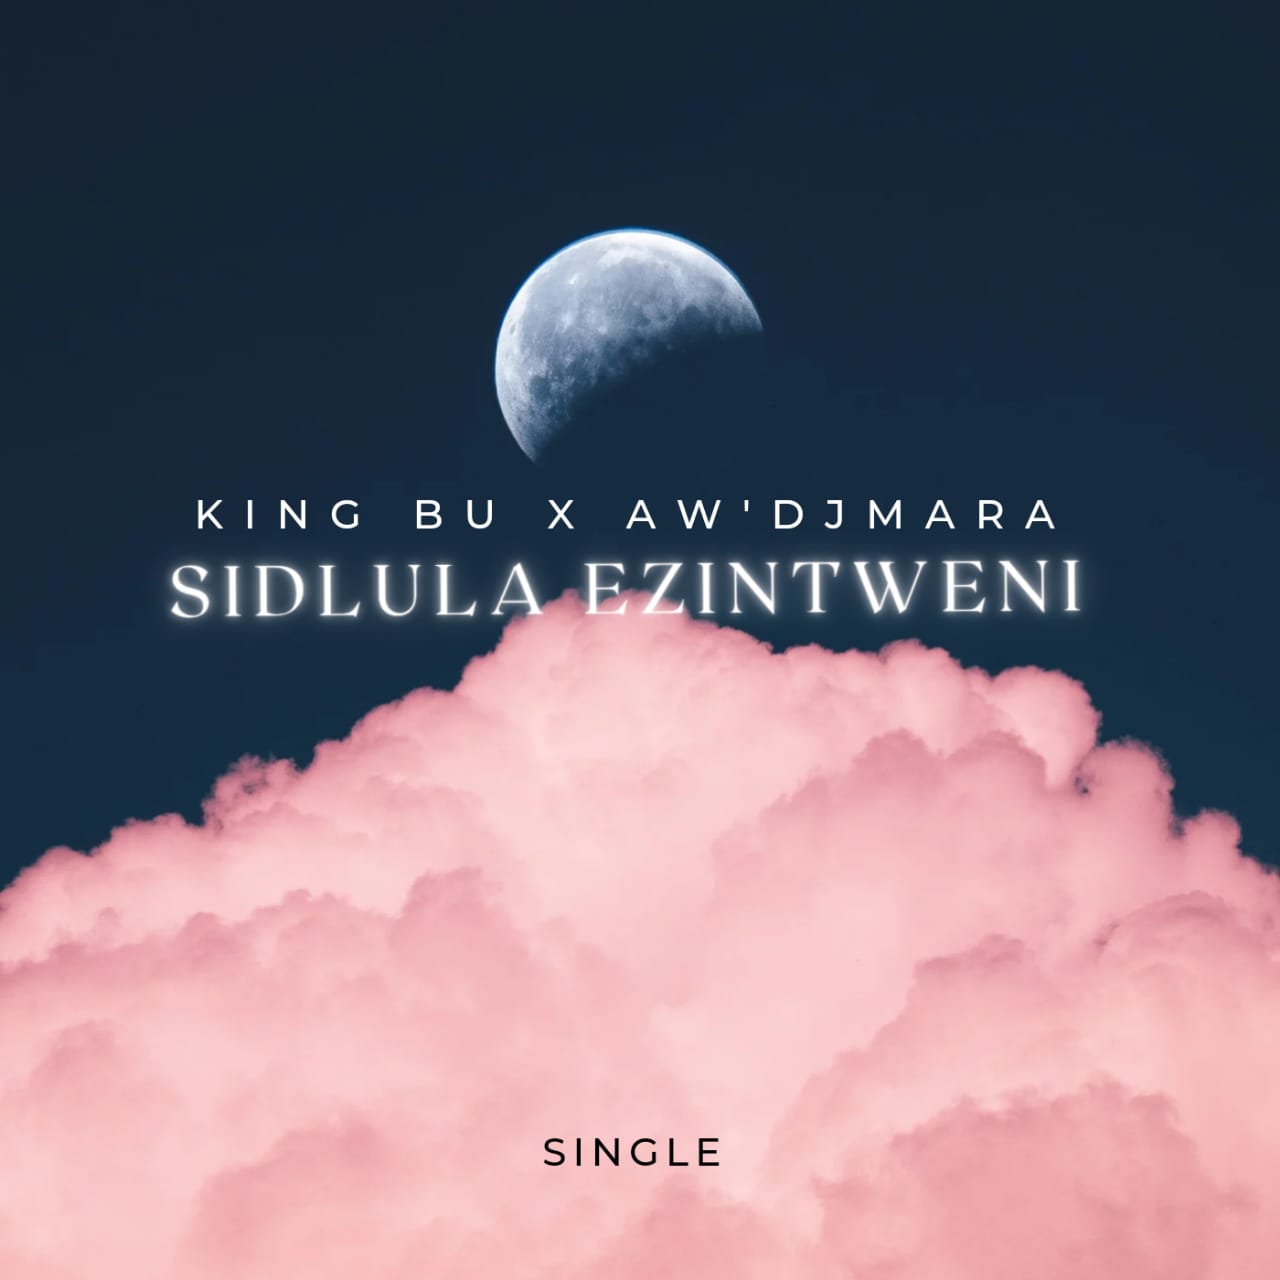 Sidlula Ezintweni - King Bu x Aw'Dj Mara